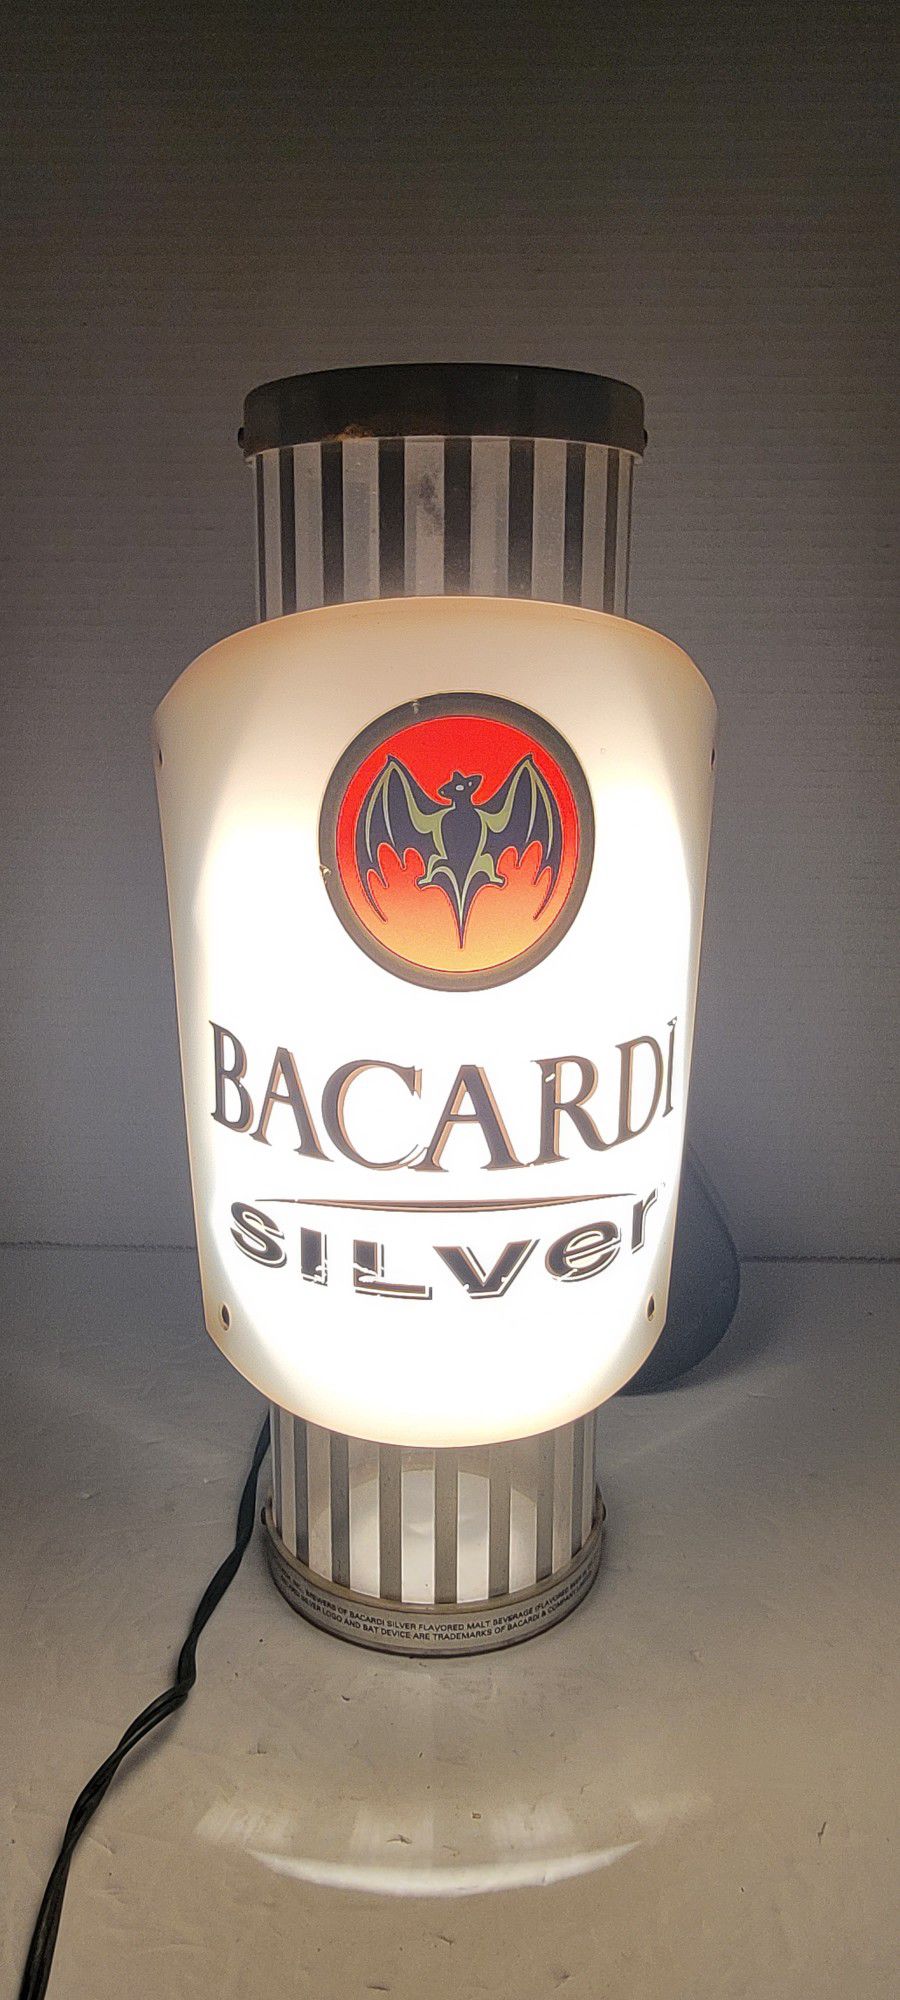 Bar Decor Bacardi Silver Old Advertising Light